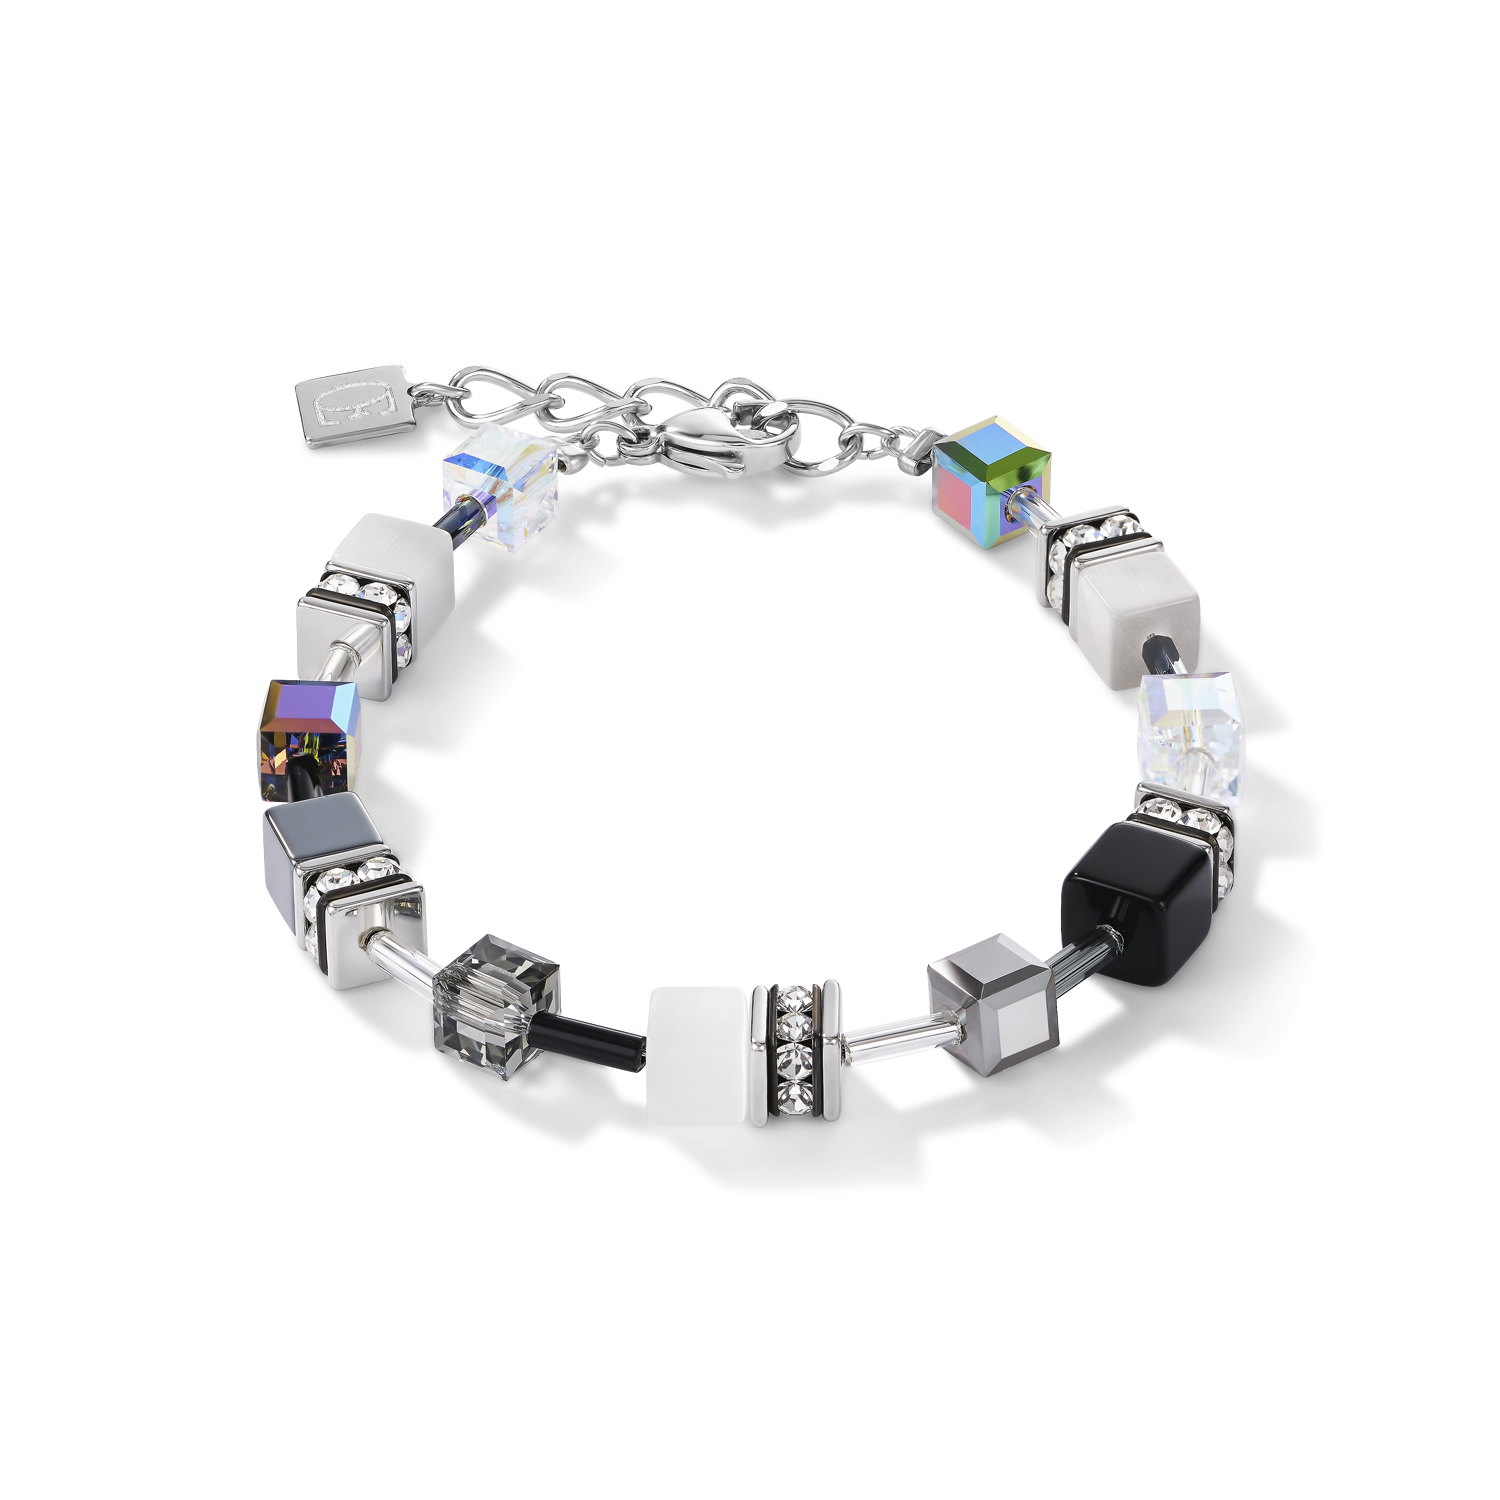 GeoCUBE® Bracelet black-white-haematite